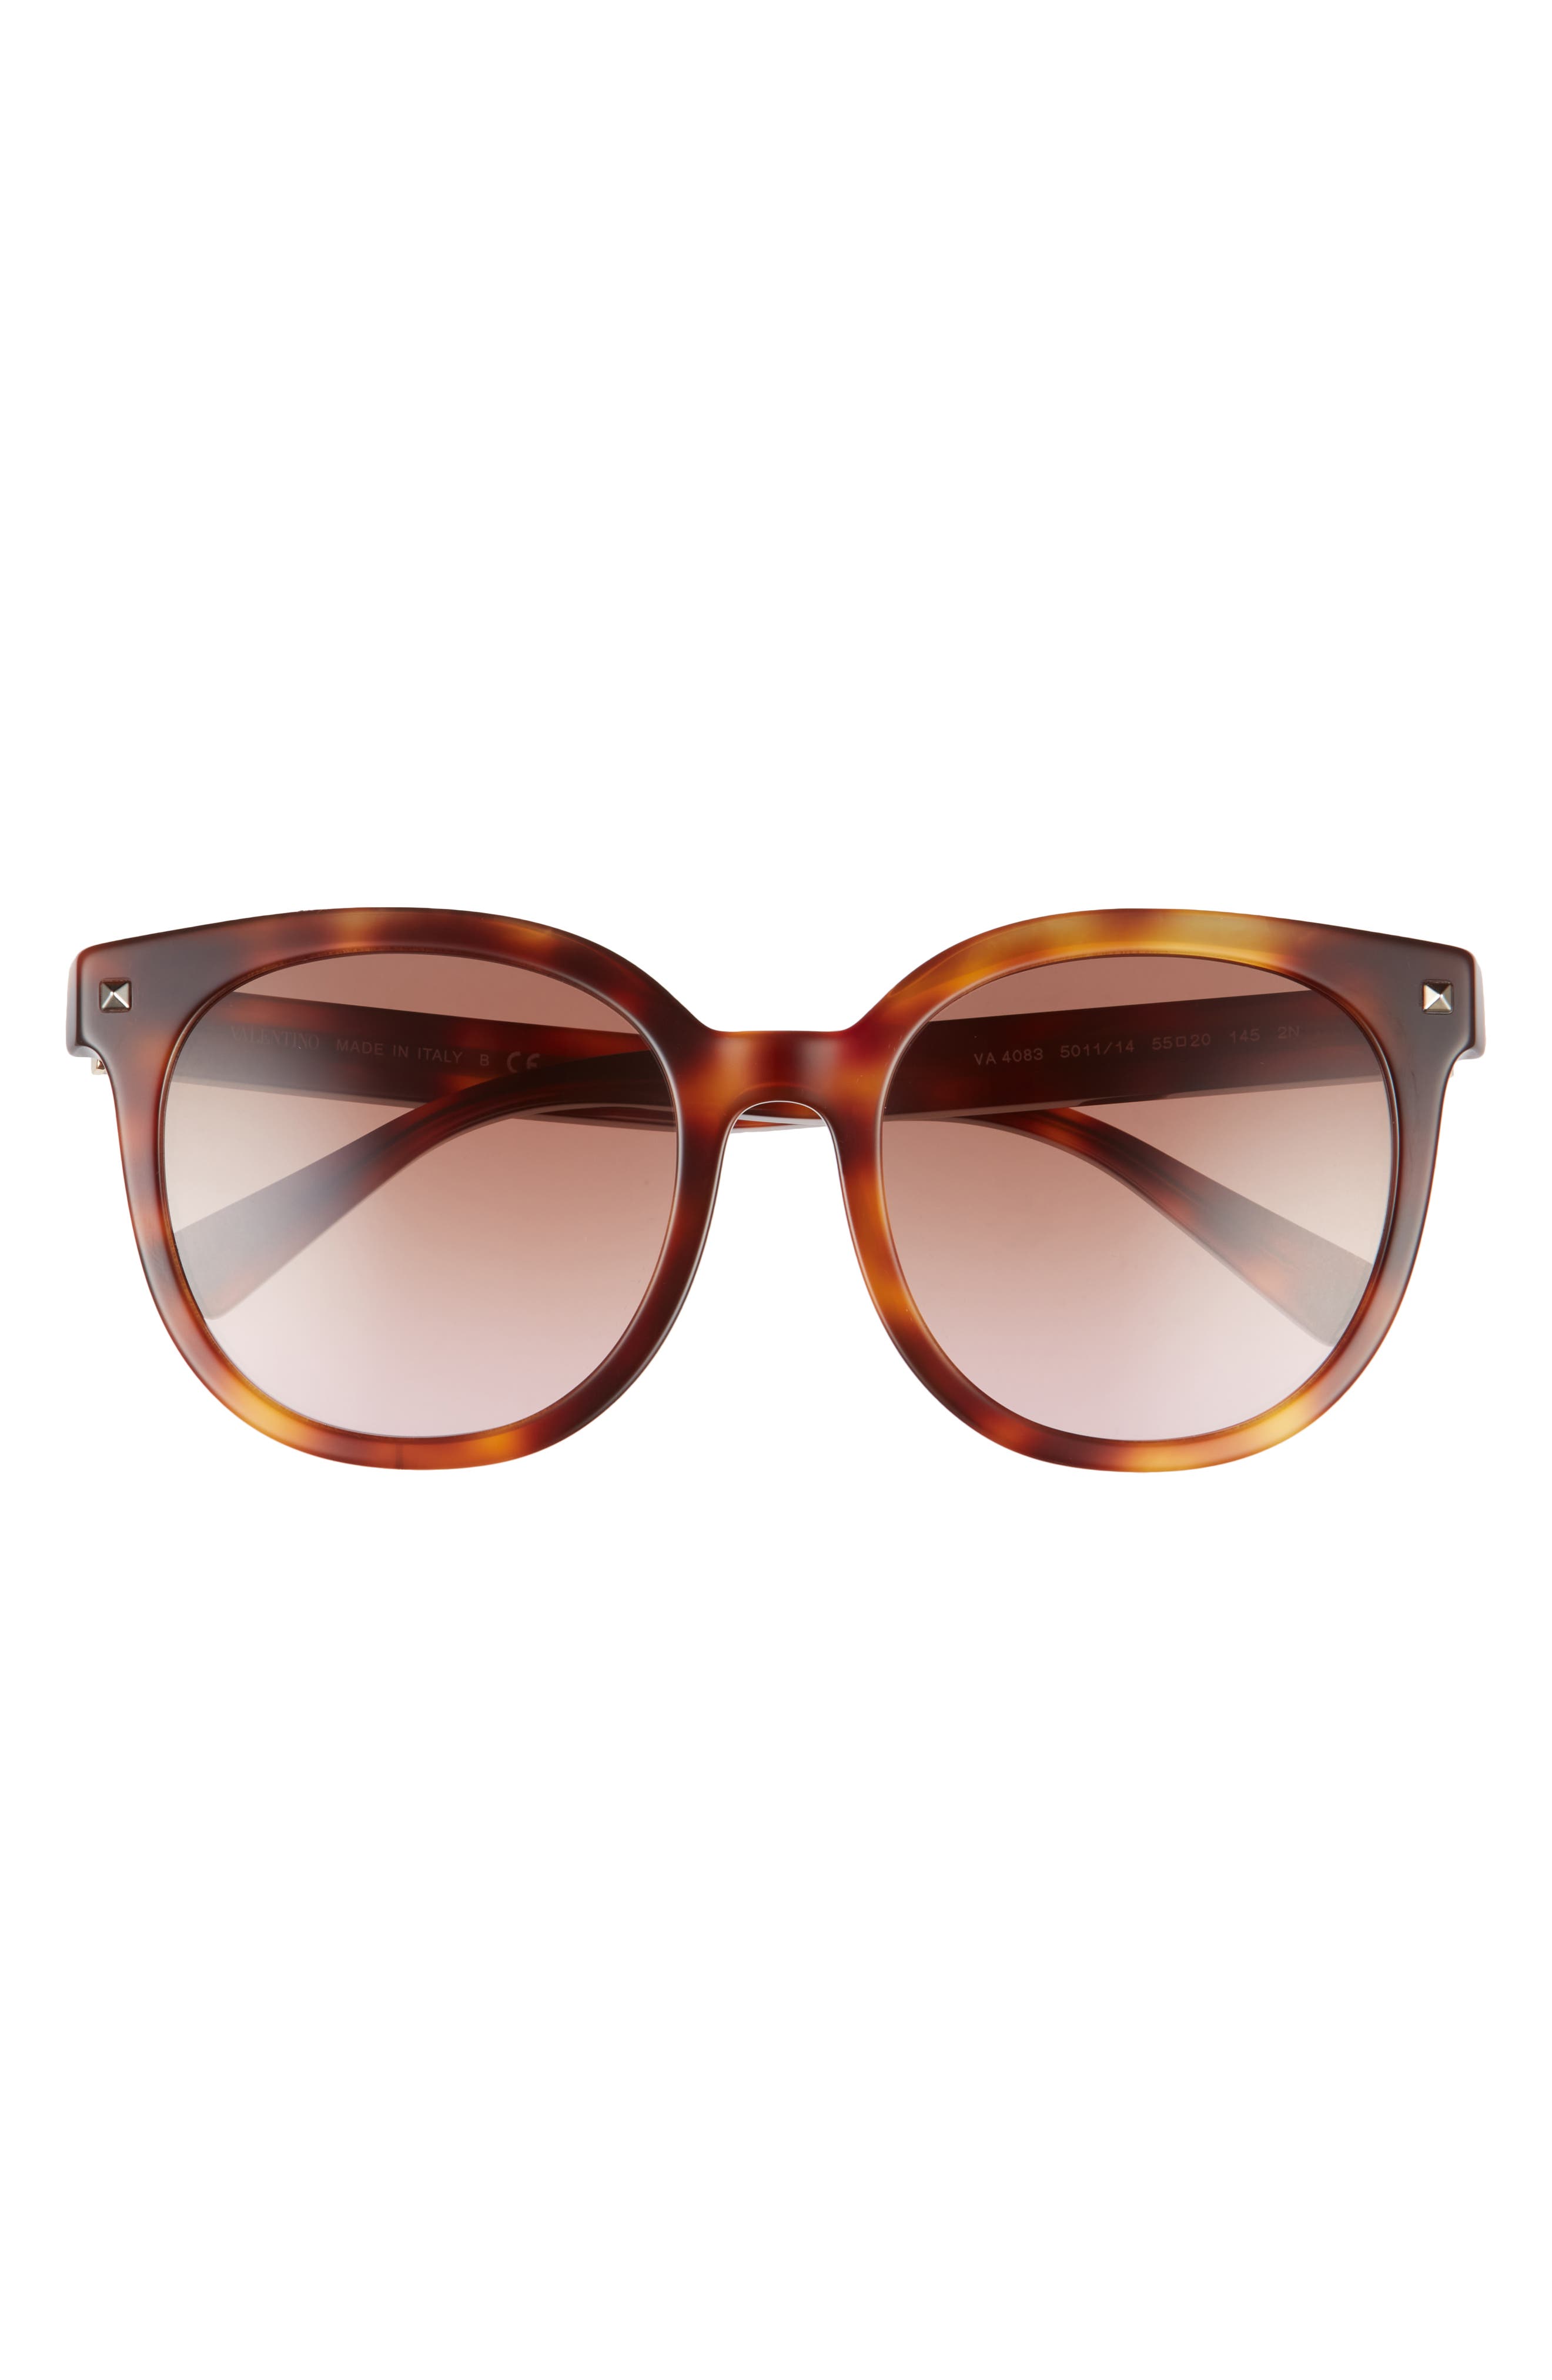 Valentino 55mm Round Sunglasses in Havana/Violet Gradient Brown at Nordstrom